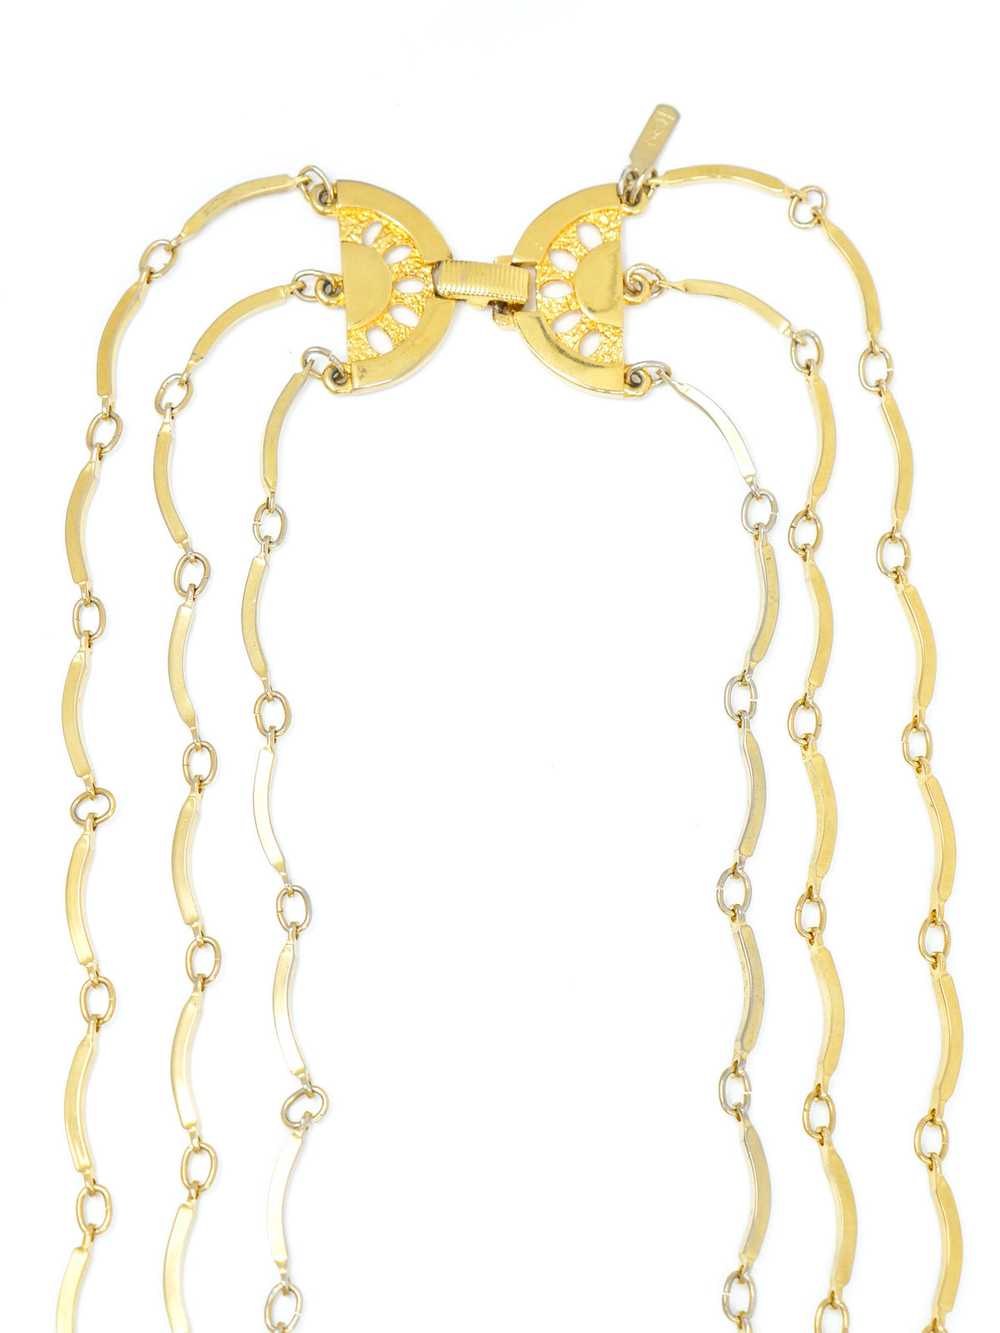 Yves Saint Laurent Three Strand Necklace - image 3